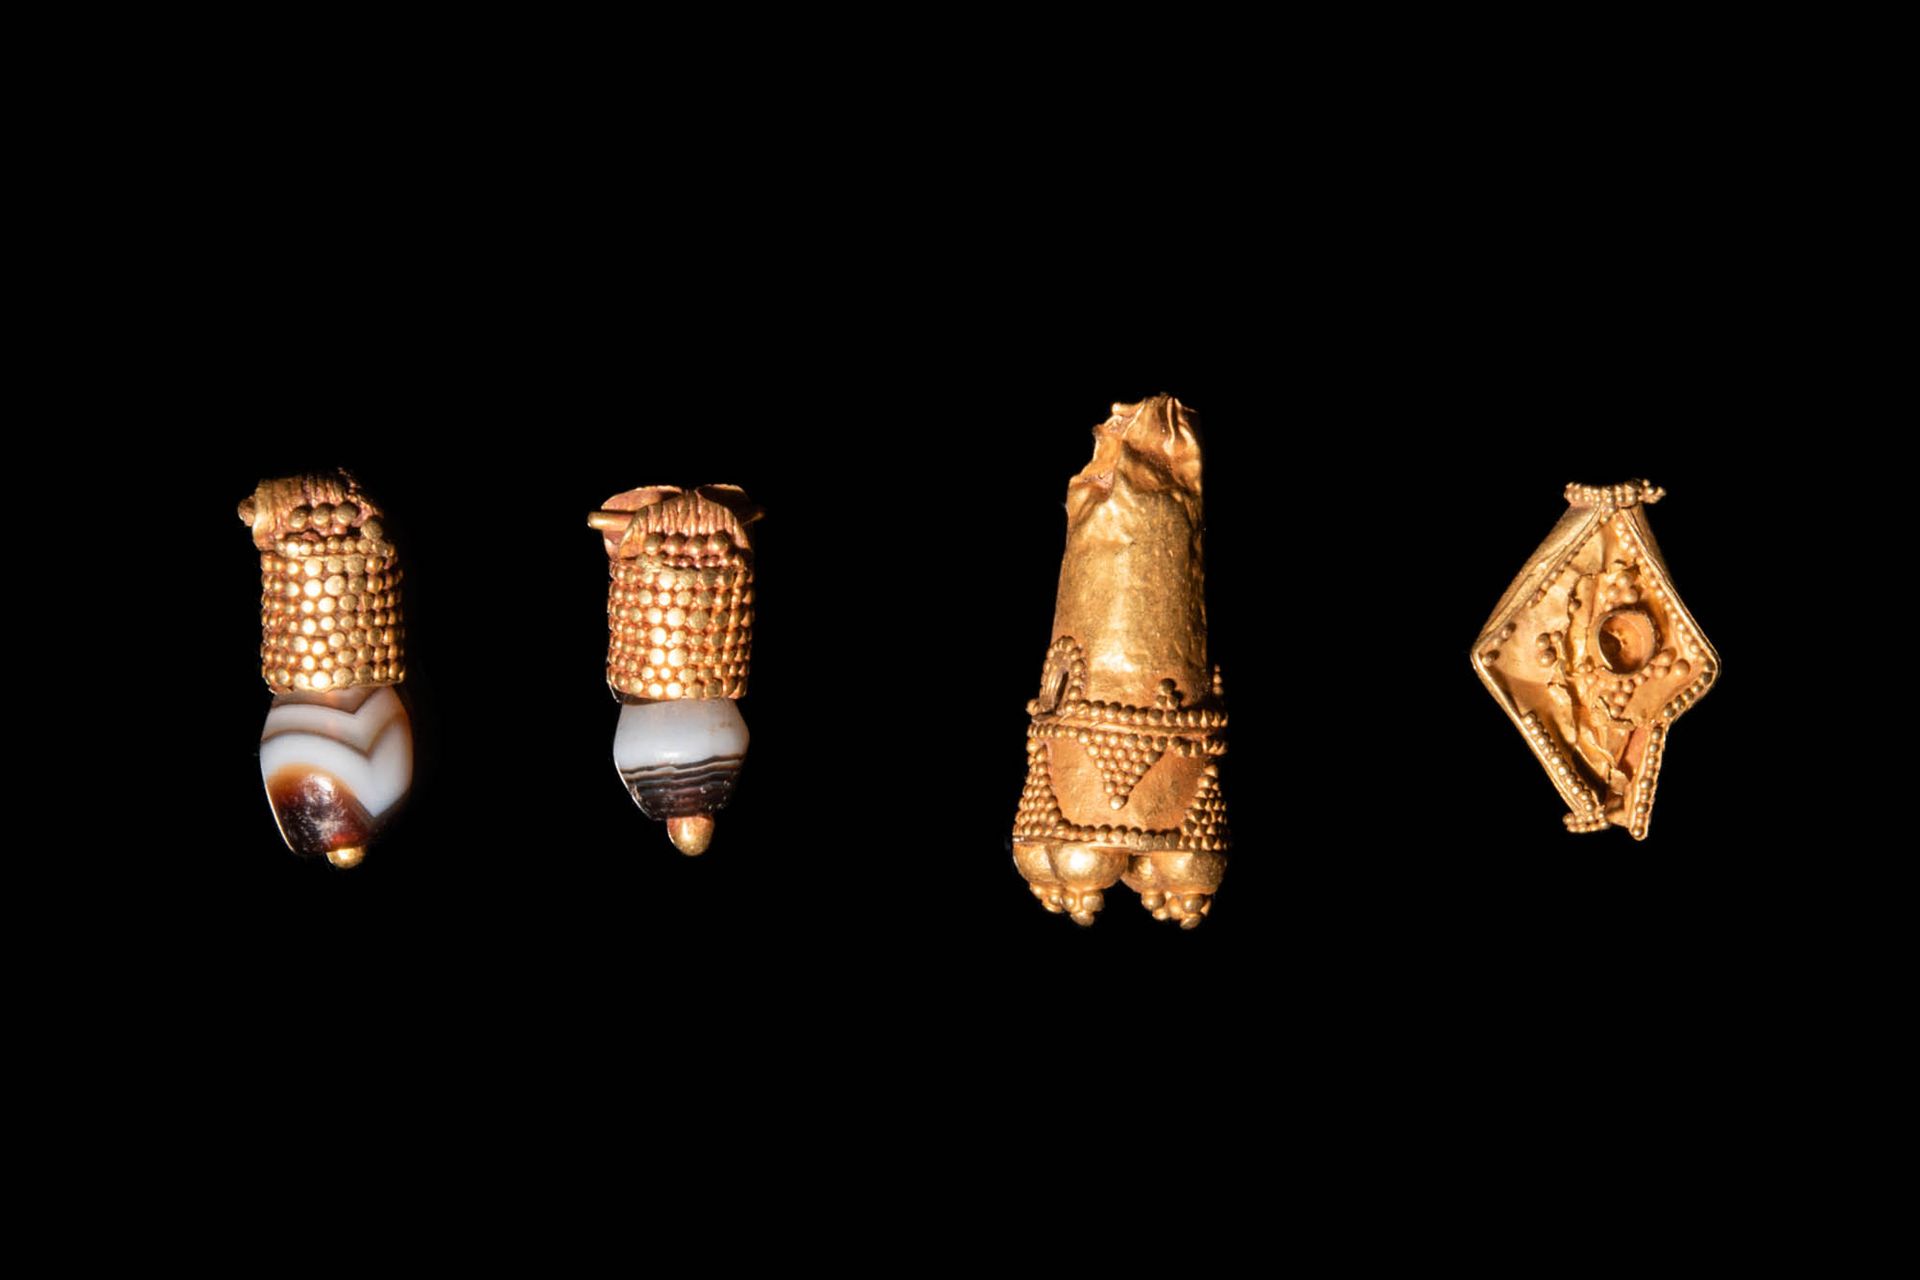 FOUR JAVANESE GOLD EARRINGS Ca. 900 - 1200 D.C.
Colección de cuatro pendientes j&hellip;